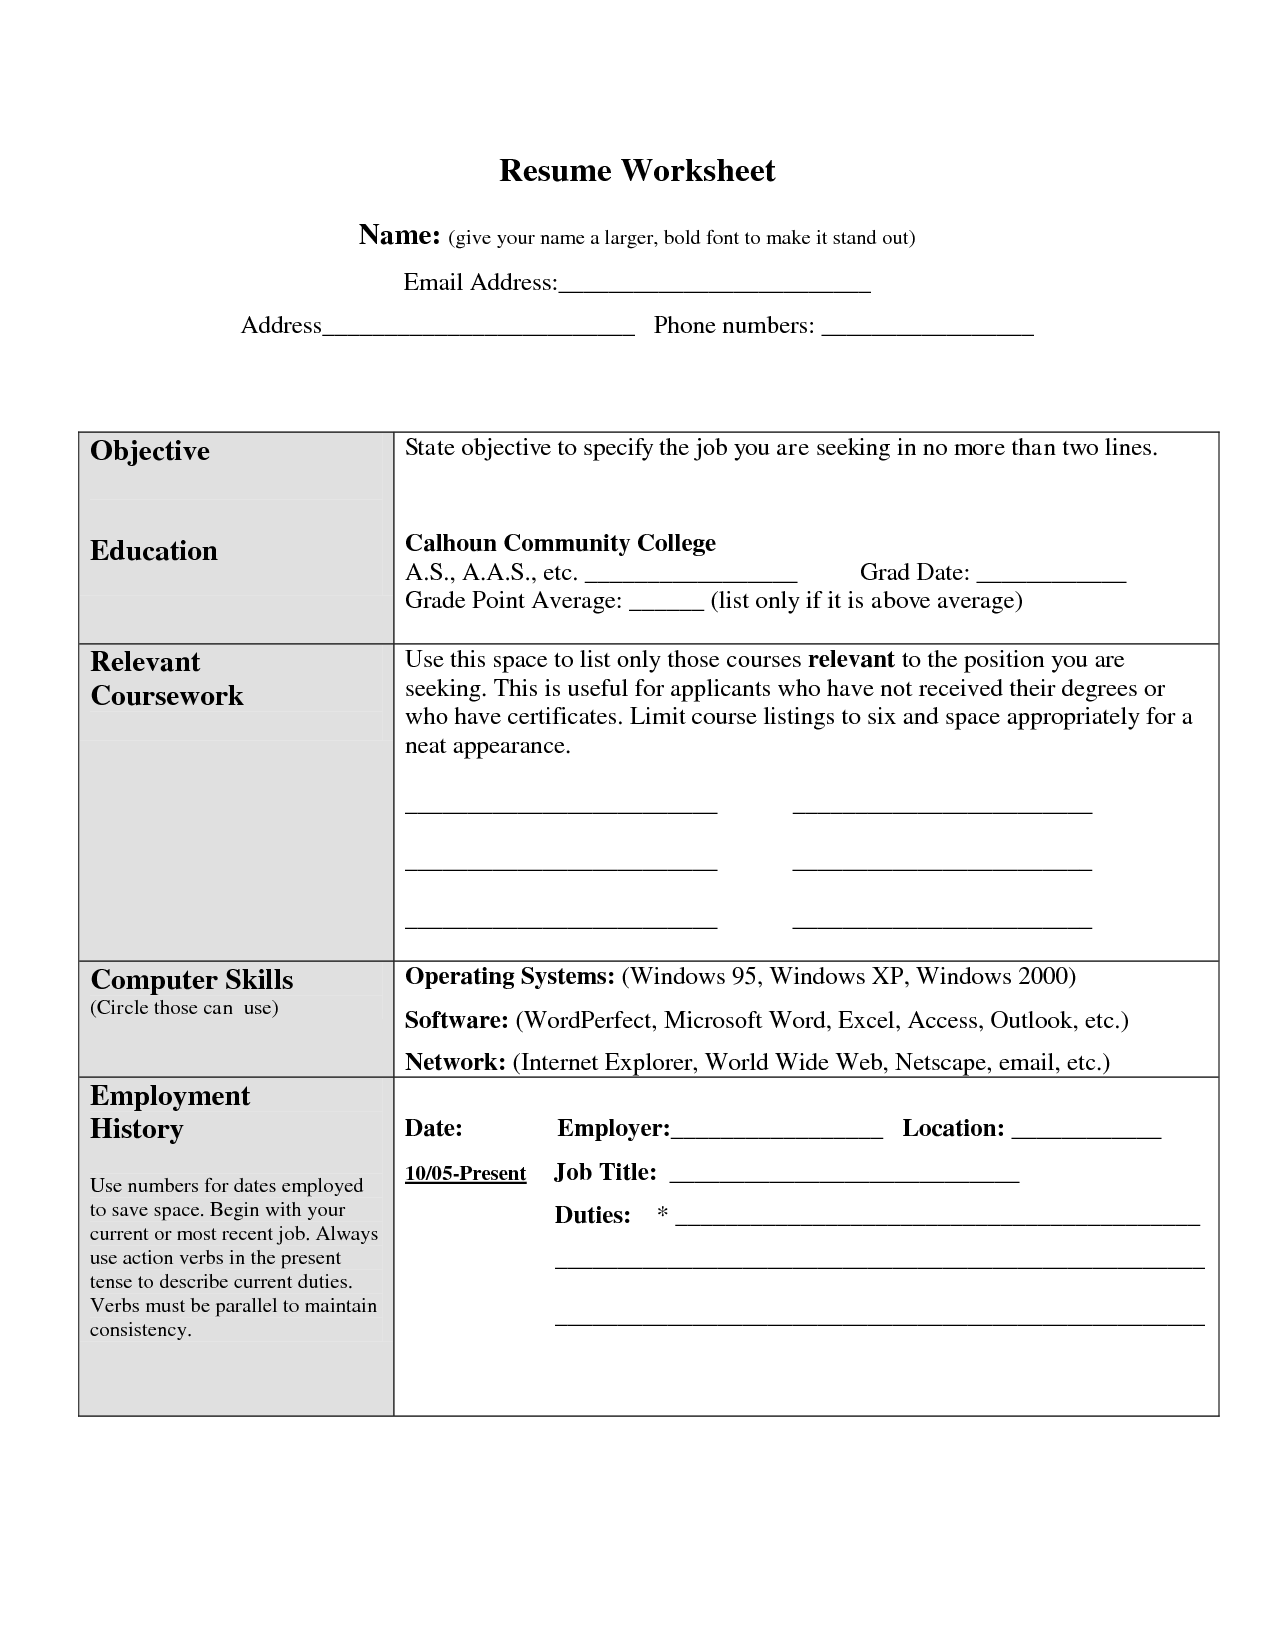 student resume worksheet